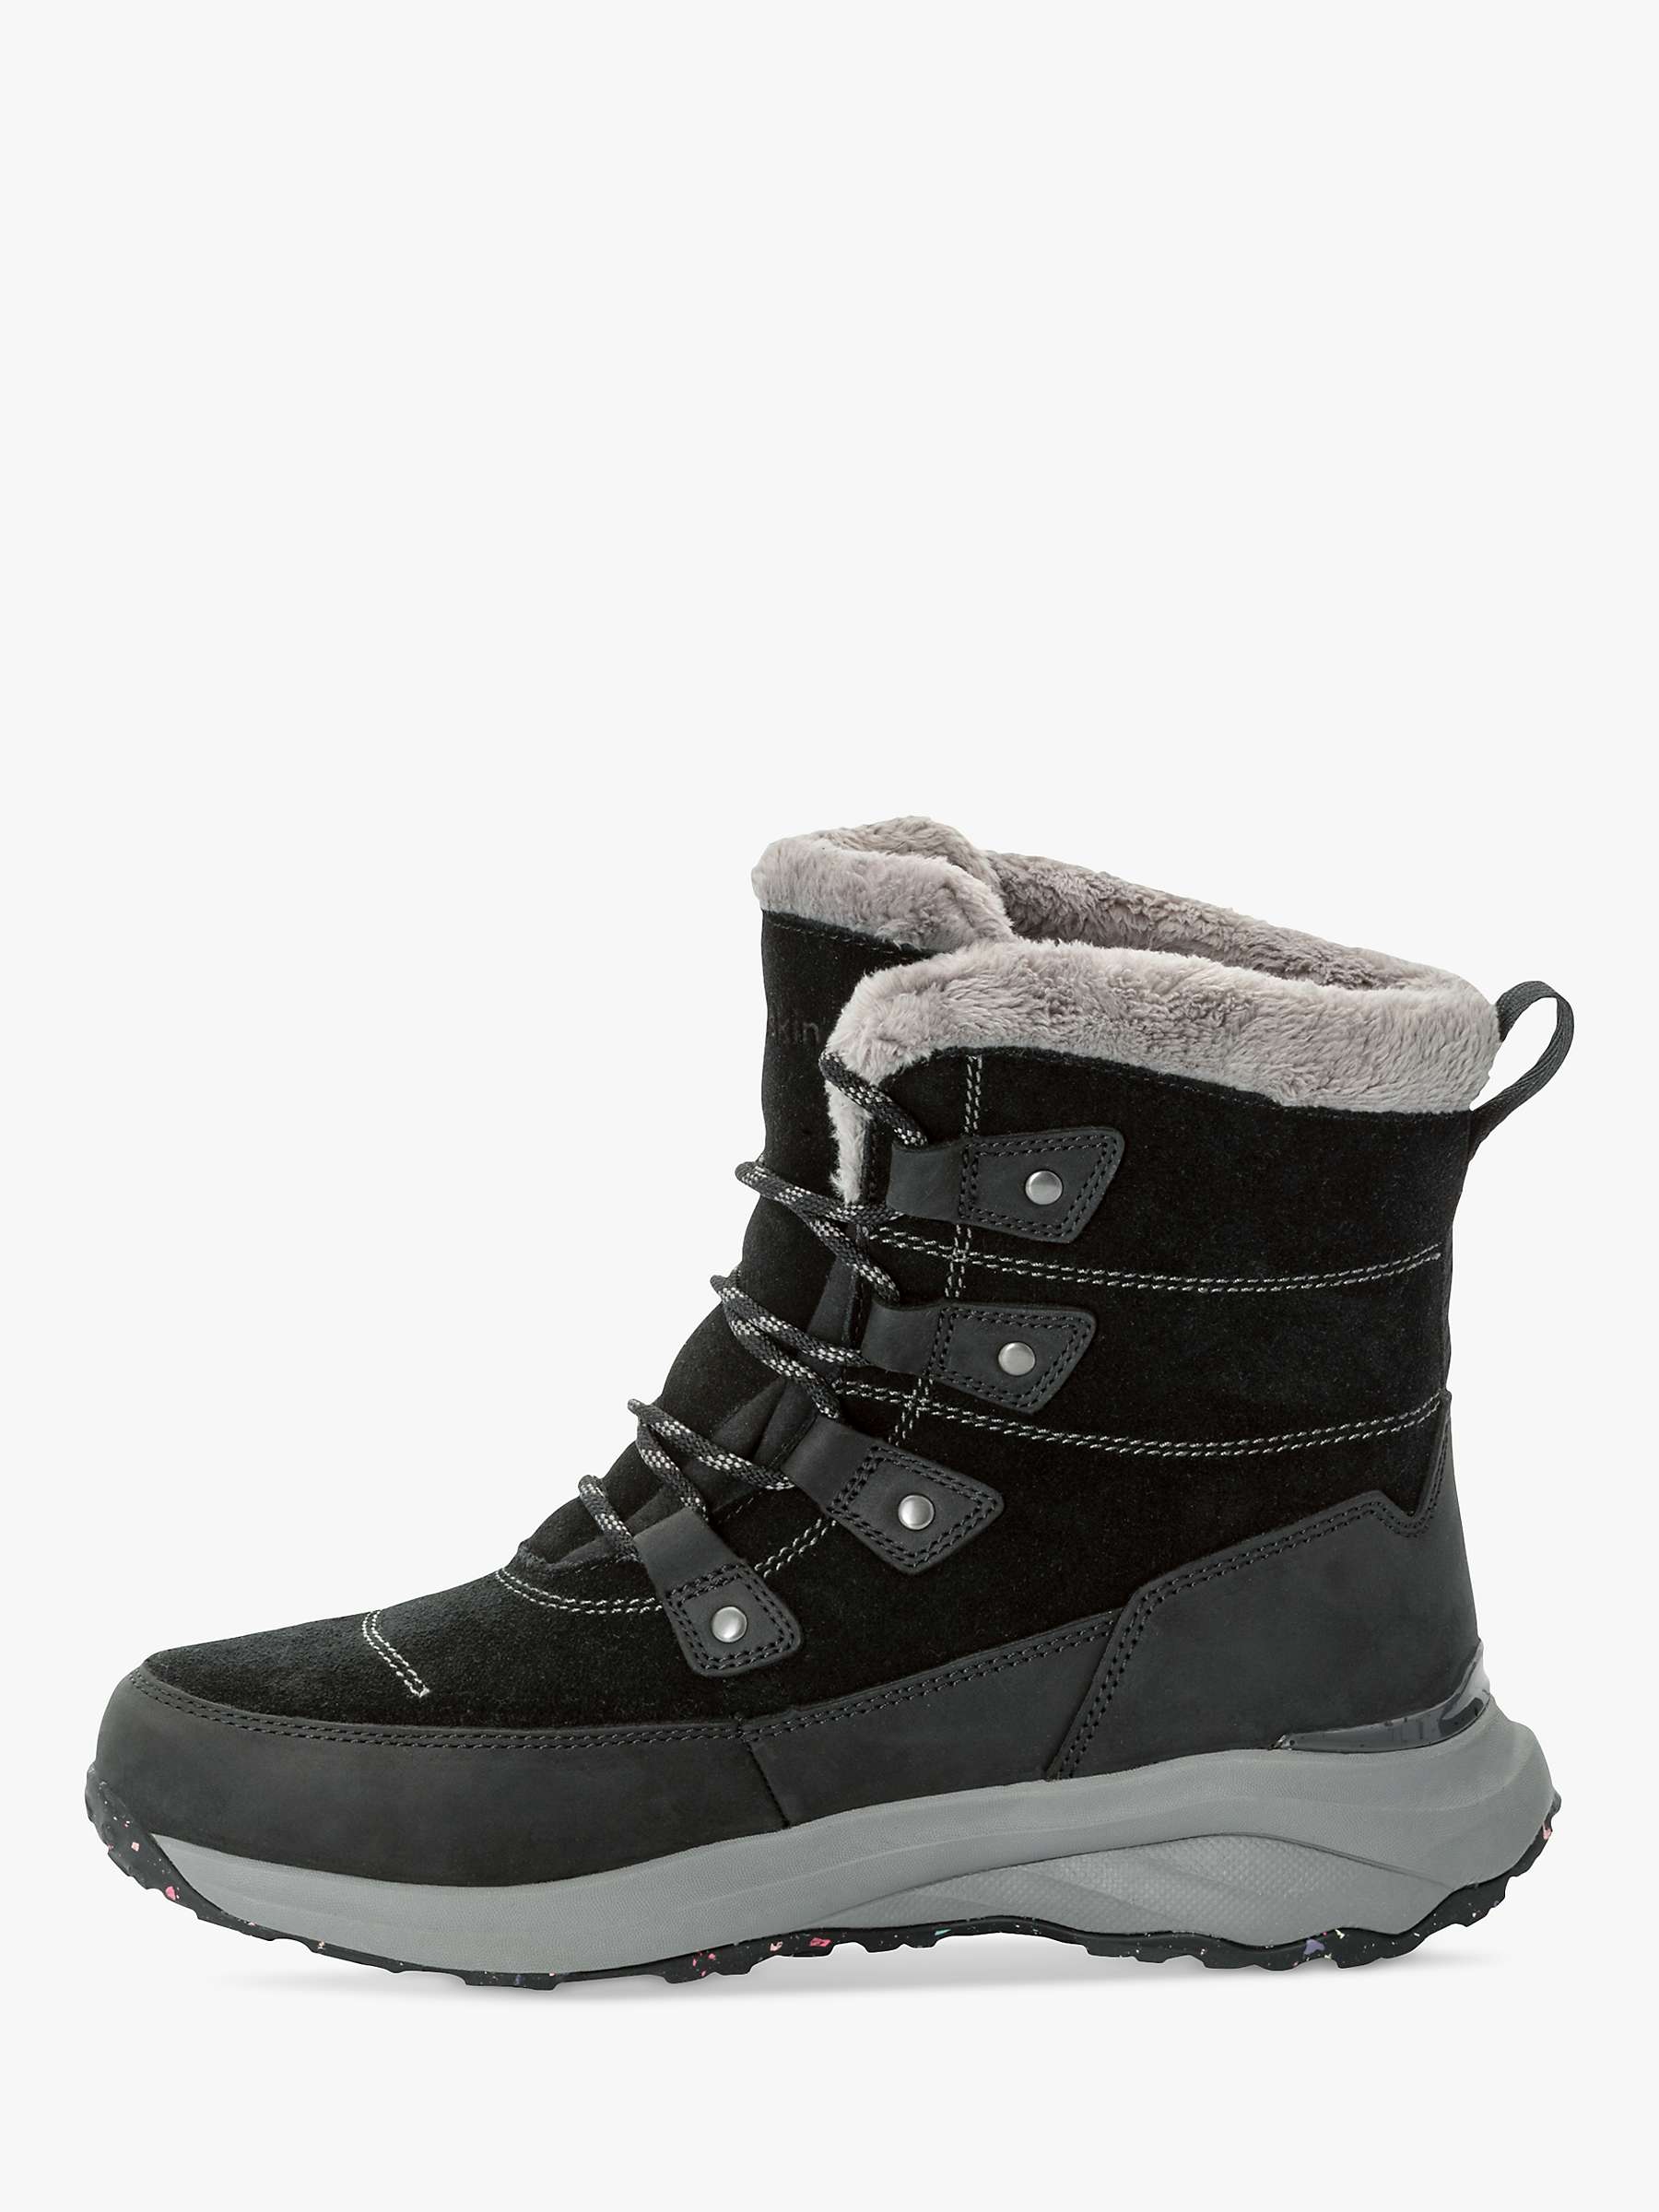 Buy Jack Wolfskin Dromoventure Texapore Women's High Waterproof Walking Boots, Phantom Online at johnlewis.com